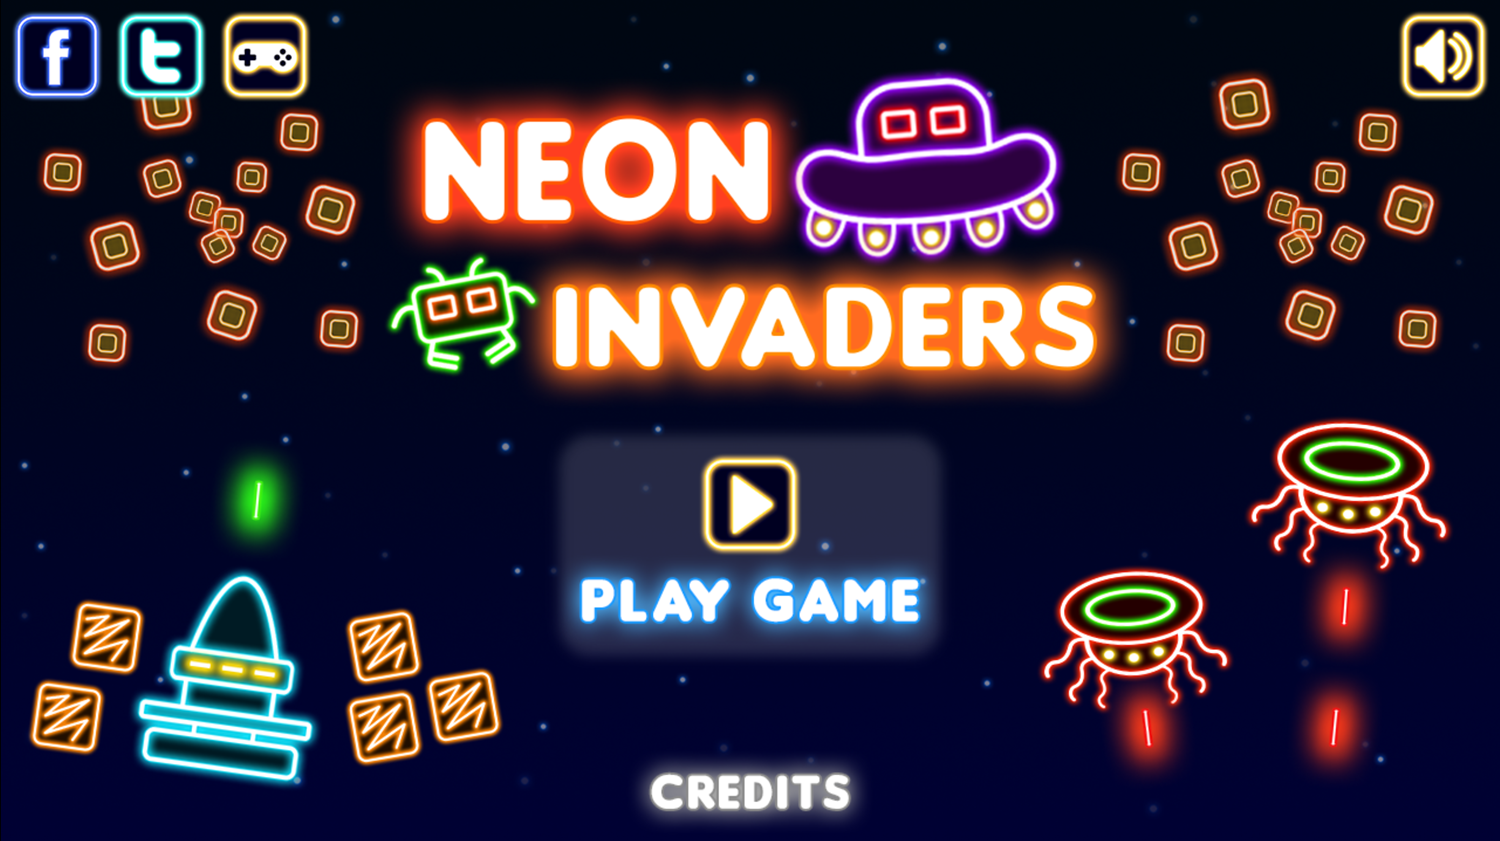 Neon Invaders Game Welcome Screenshot.